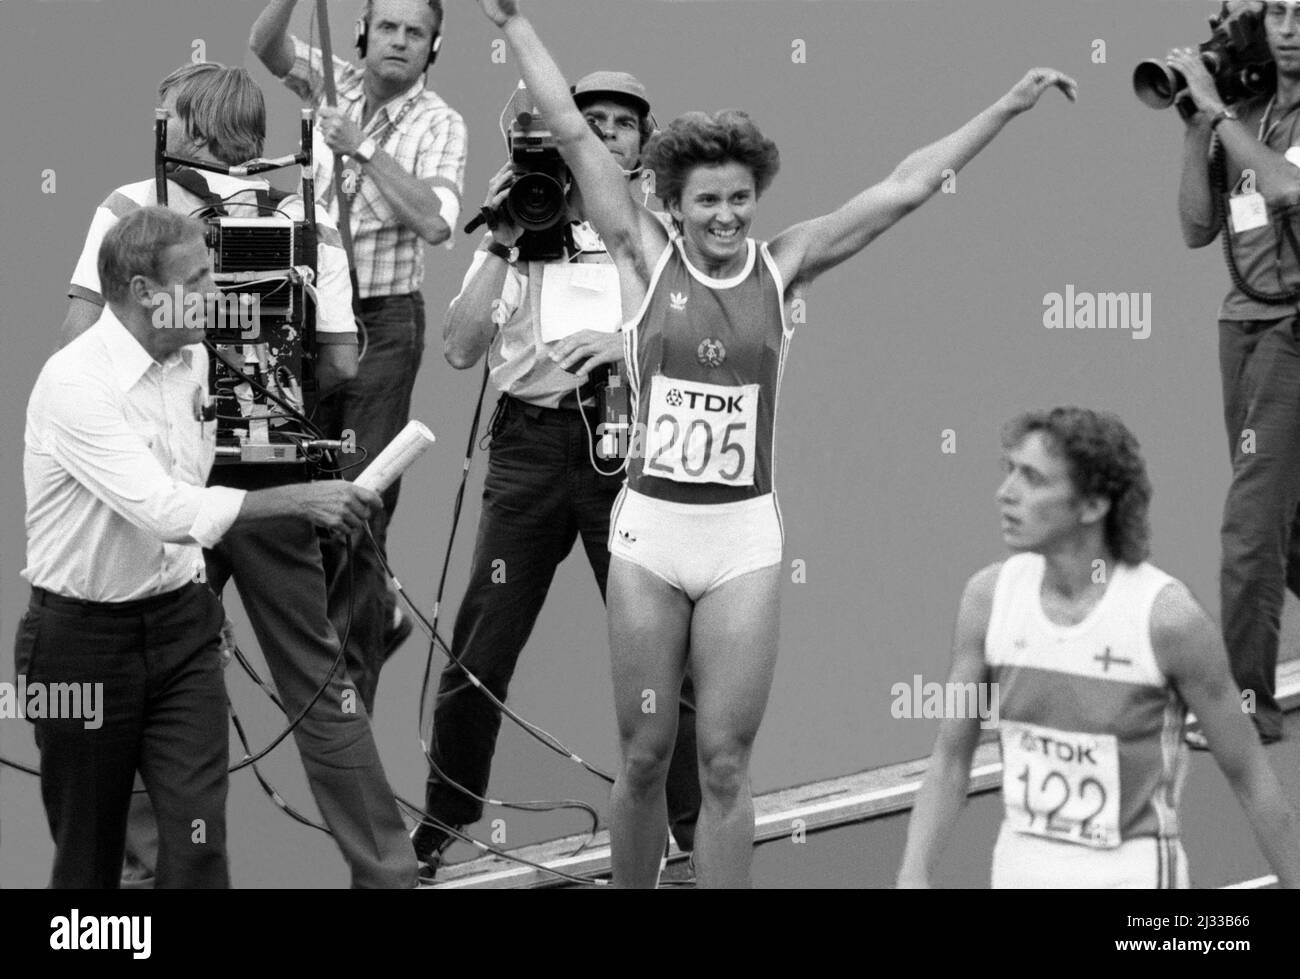 MARLIES GÖHR DDR 100m sprint at world athletics championship in Helsinki Finland 1982 Stock Photo